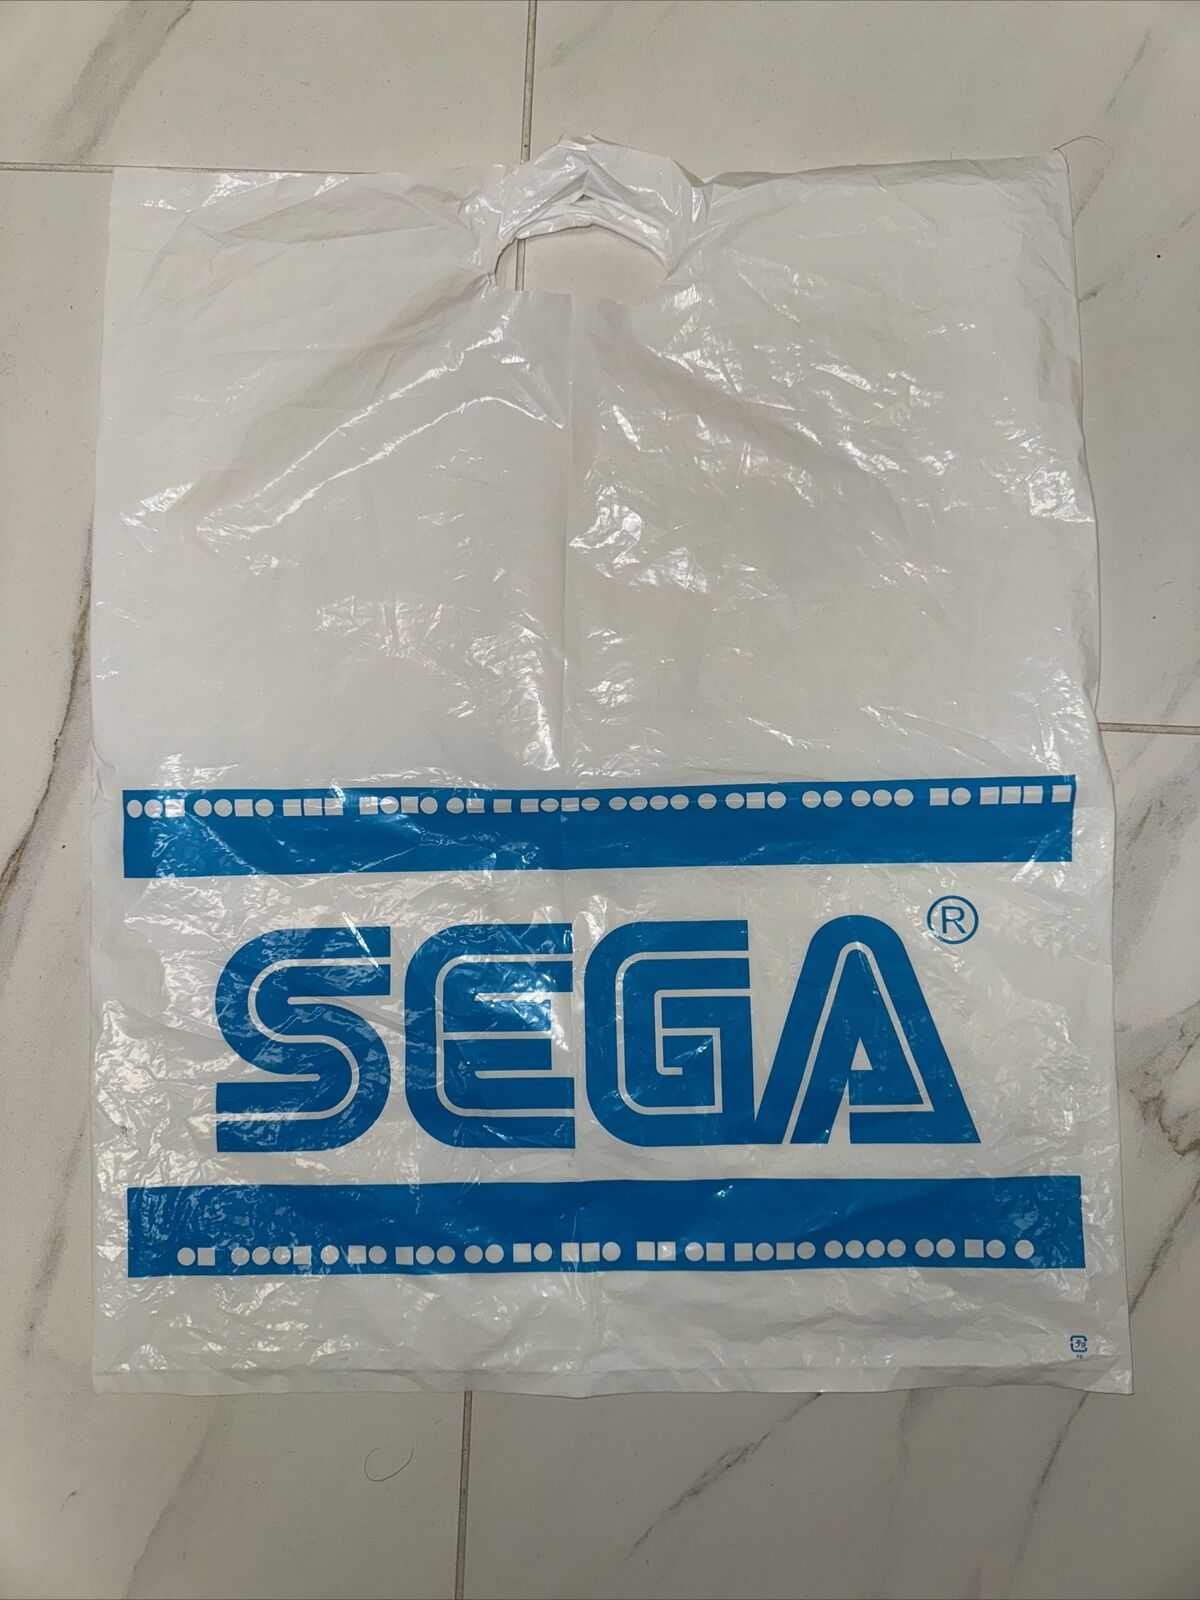 2014 Sega Plastic Store Bag With Hidden Message 